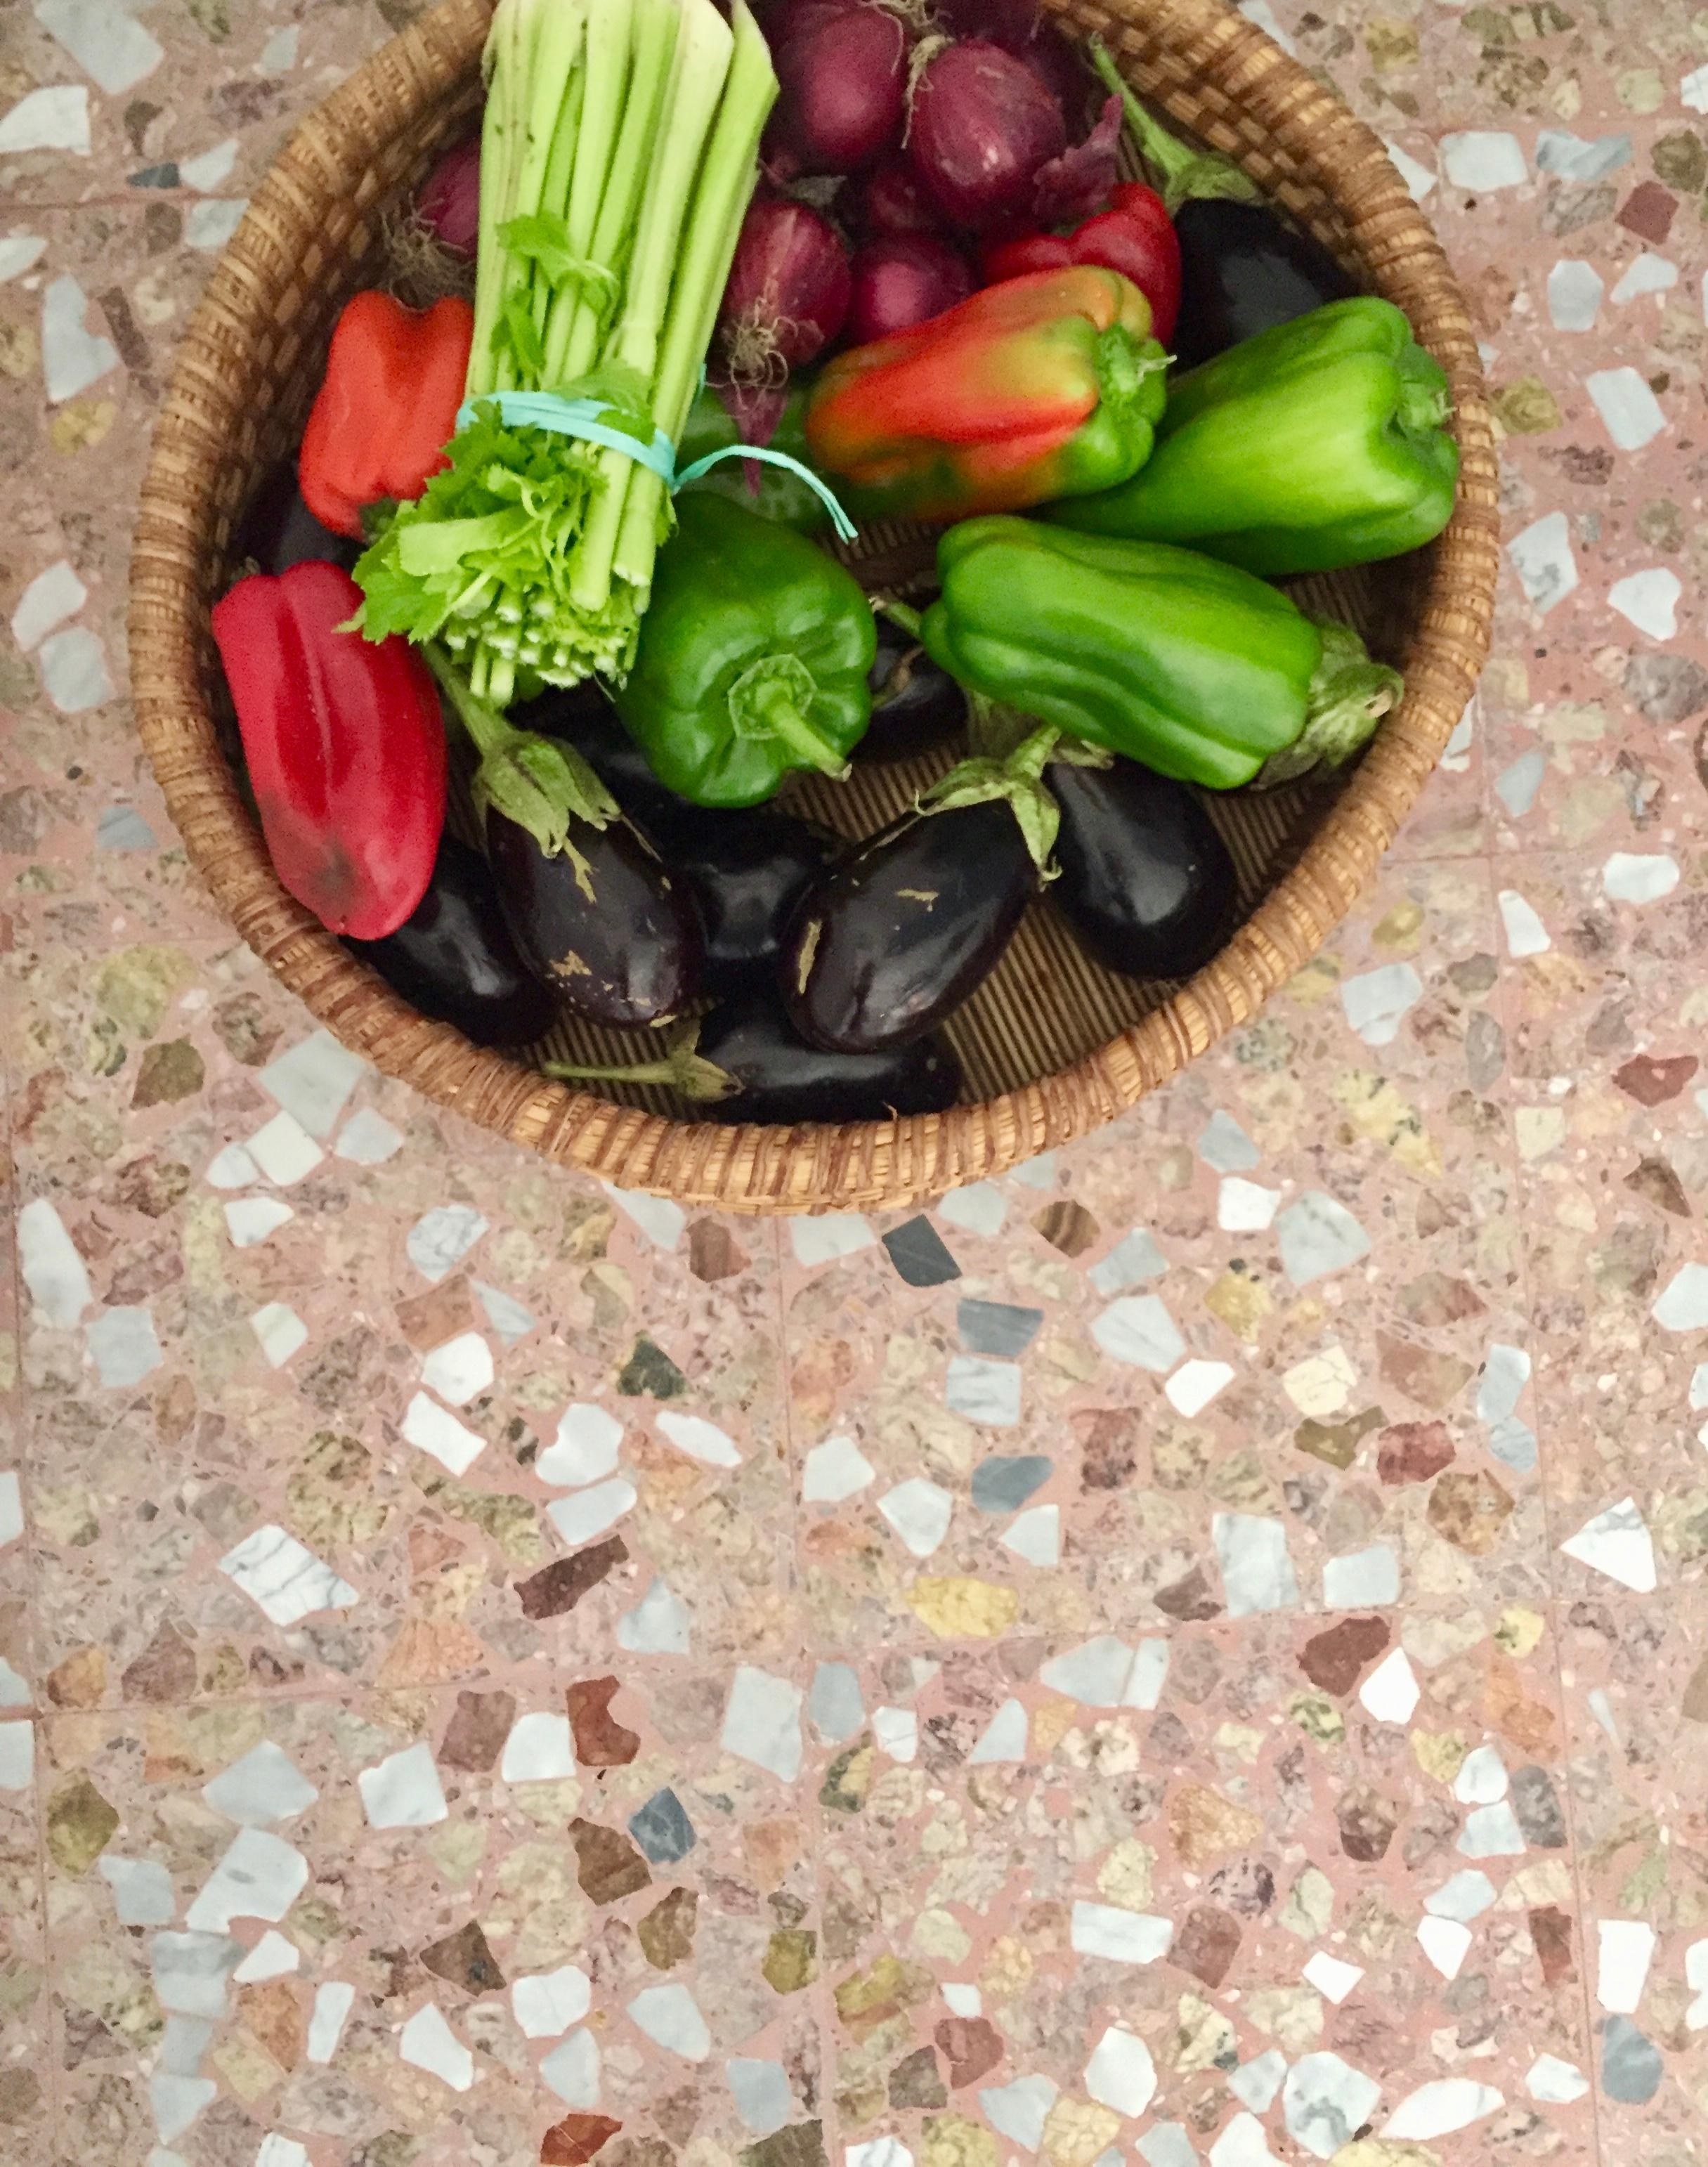 #Foodlove#italienfood#verdura#terrazzo#Stilllebenverdureterrazzo